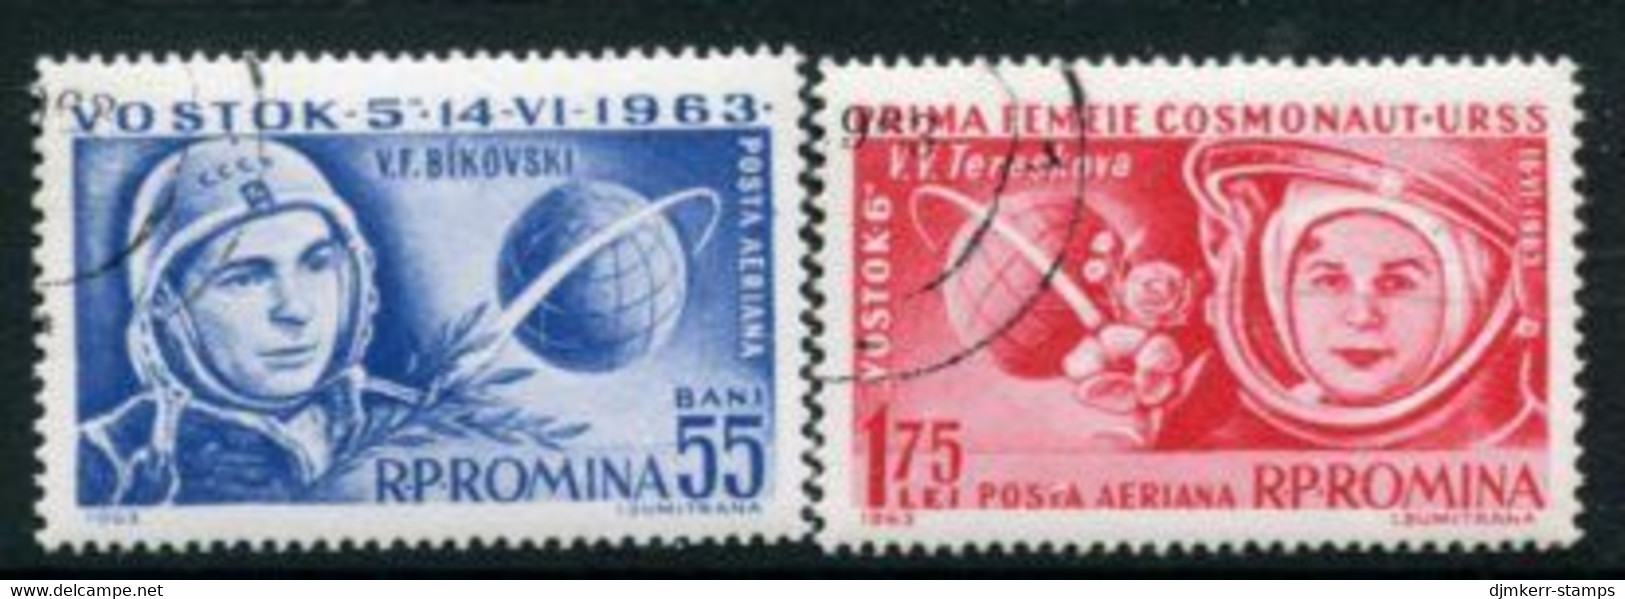 ROMANIA 1963 Vostok 5 And 6 Space Flights Used.  Michel 2171-72 - Usati